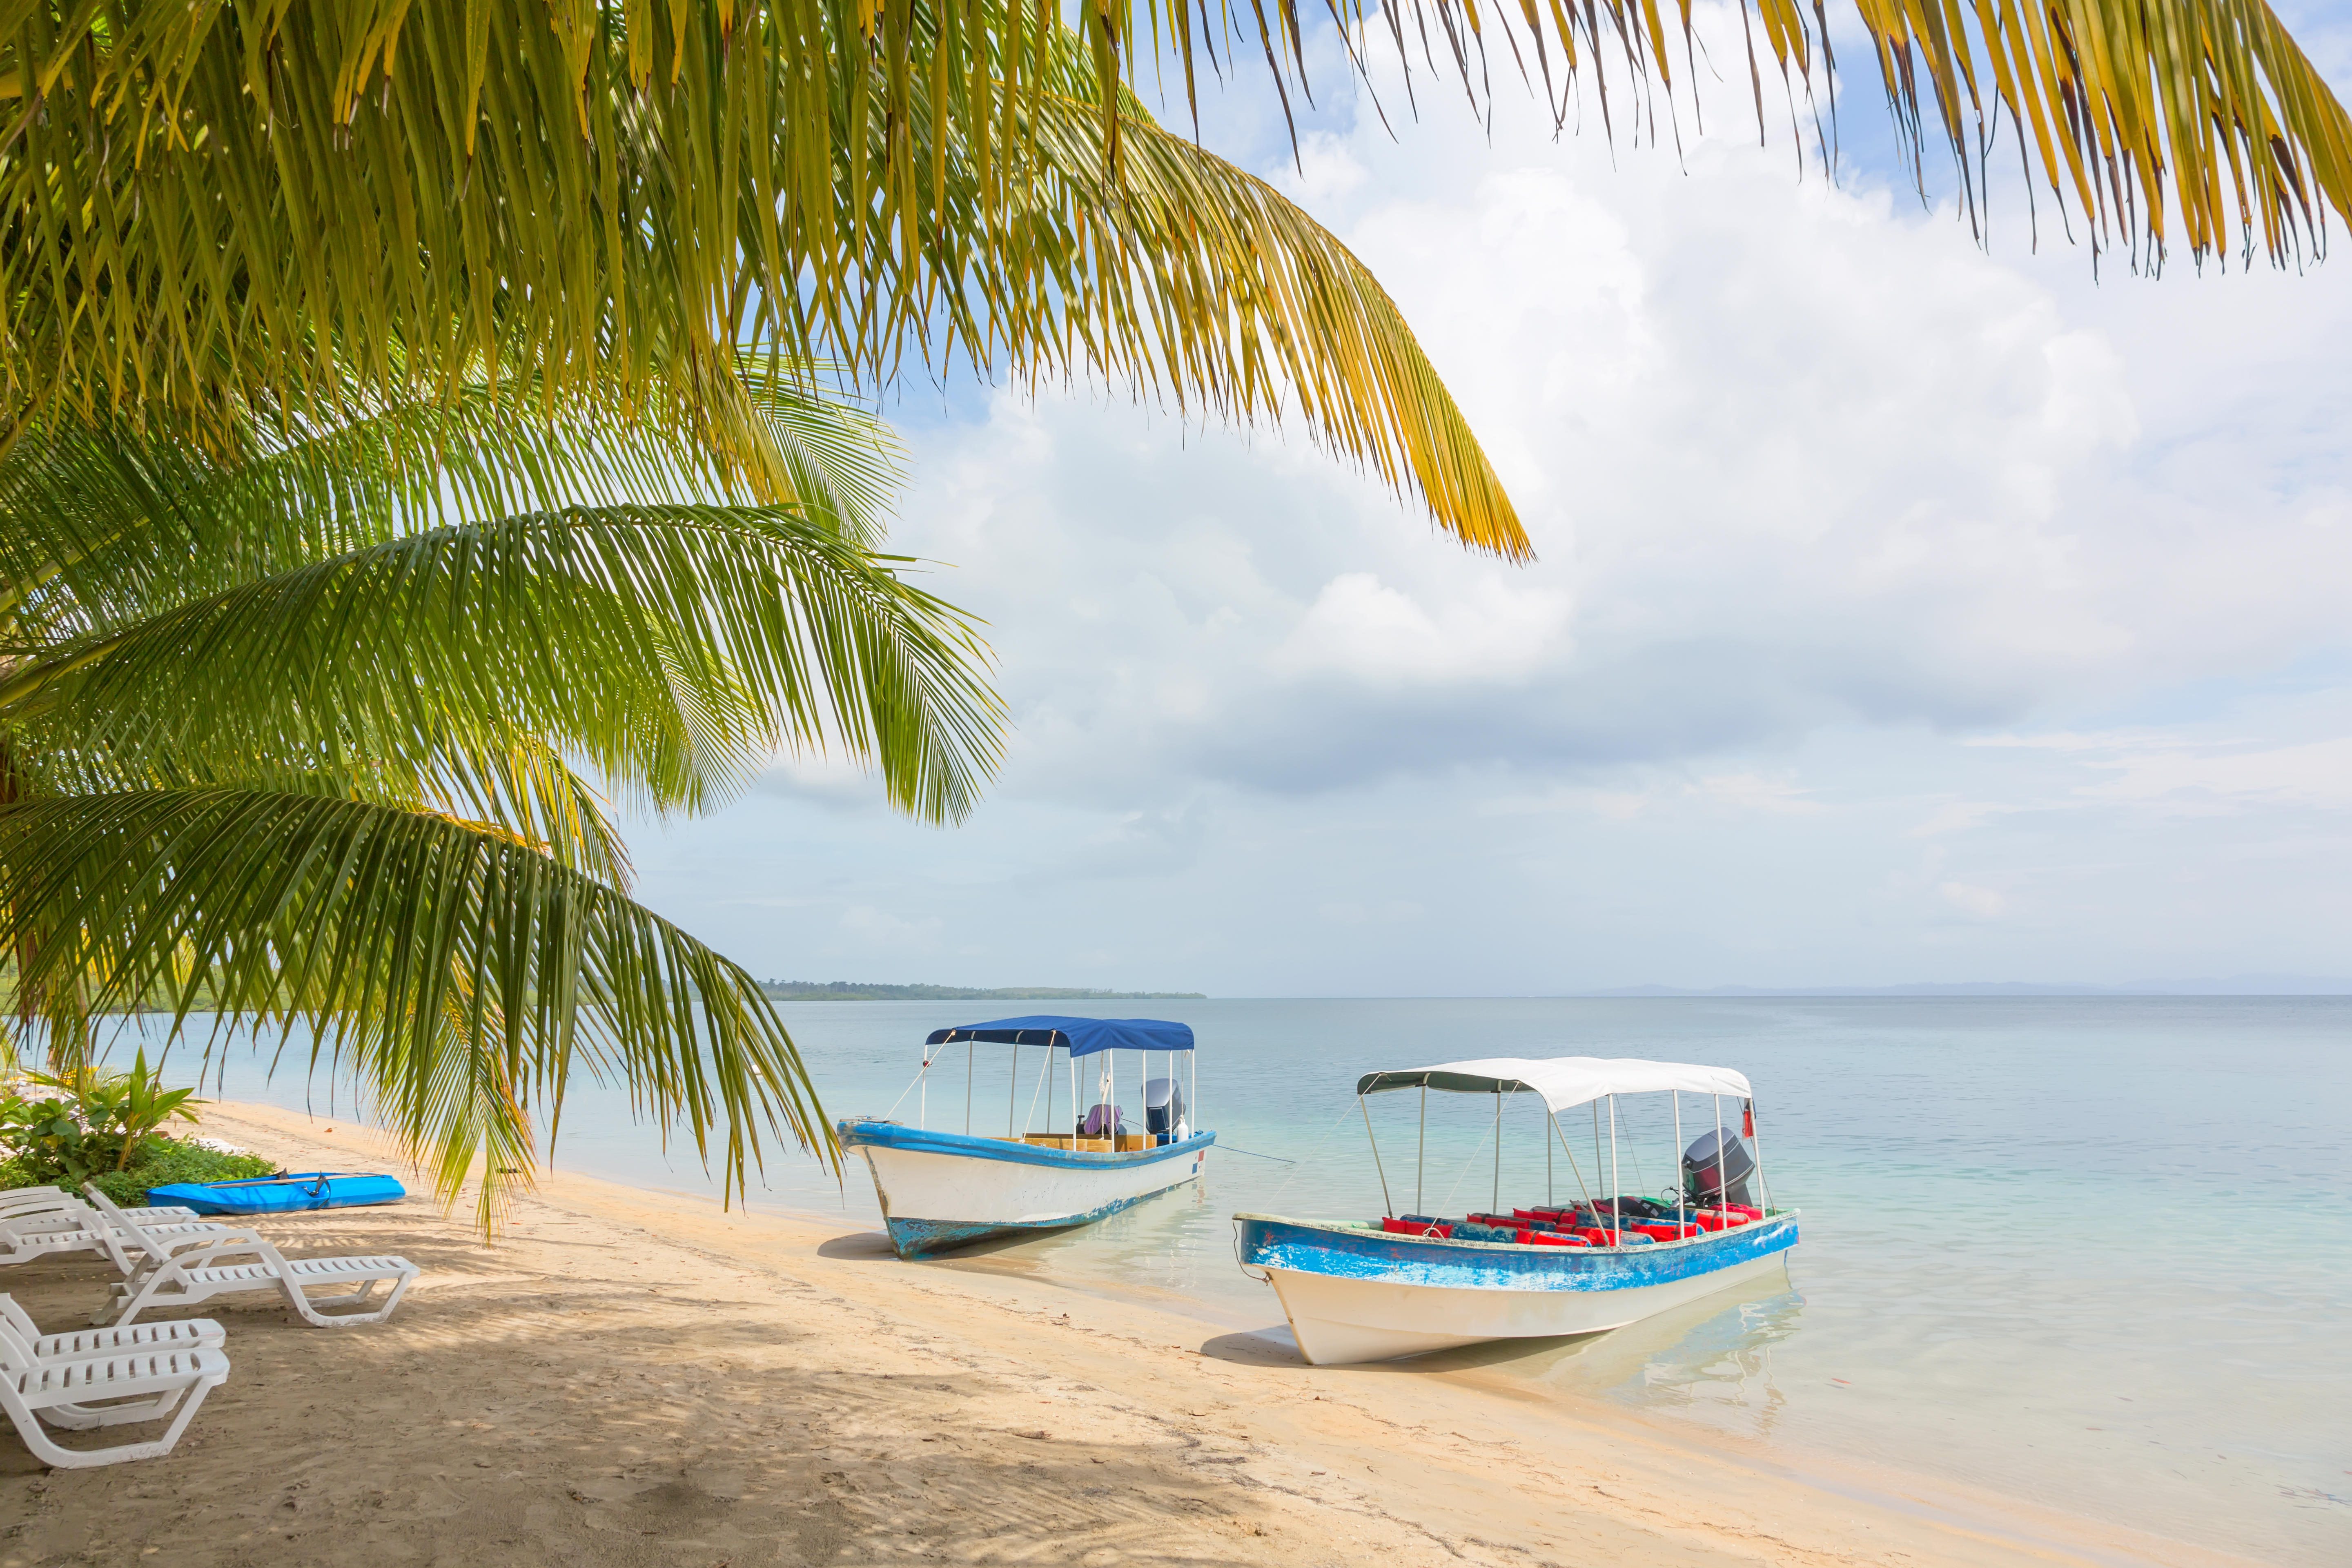 Boats at the Starfish beach, archipelago Bocas del Toro, Panama